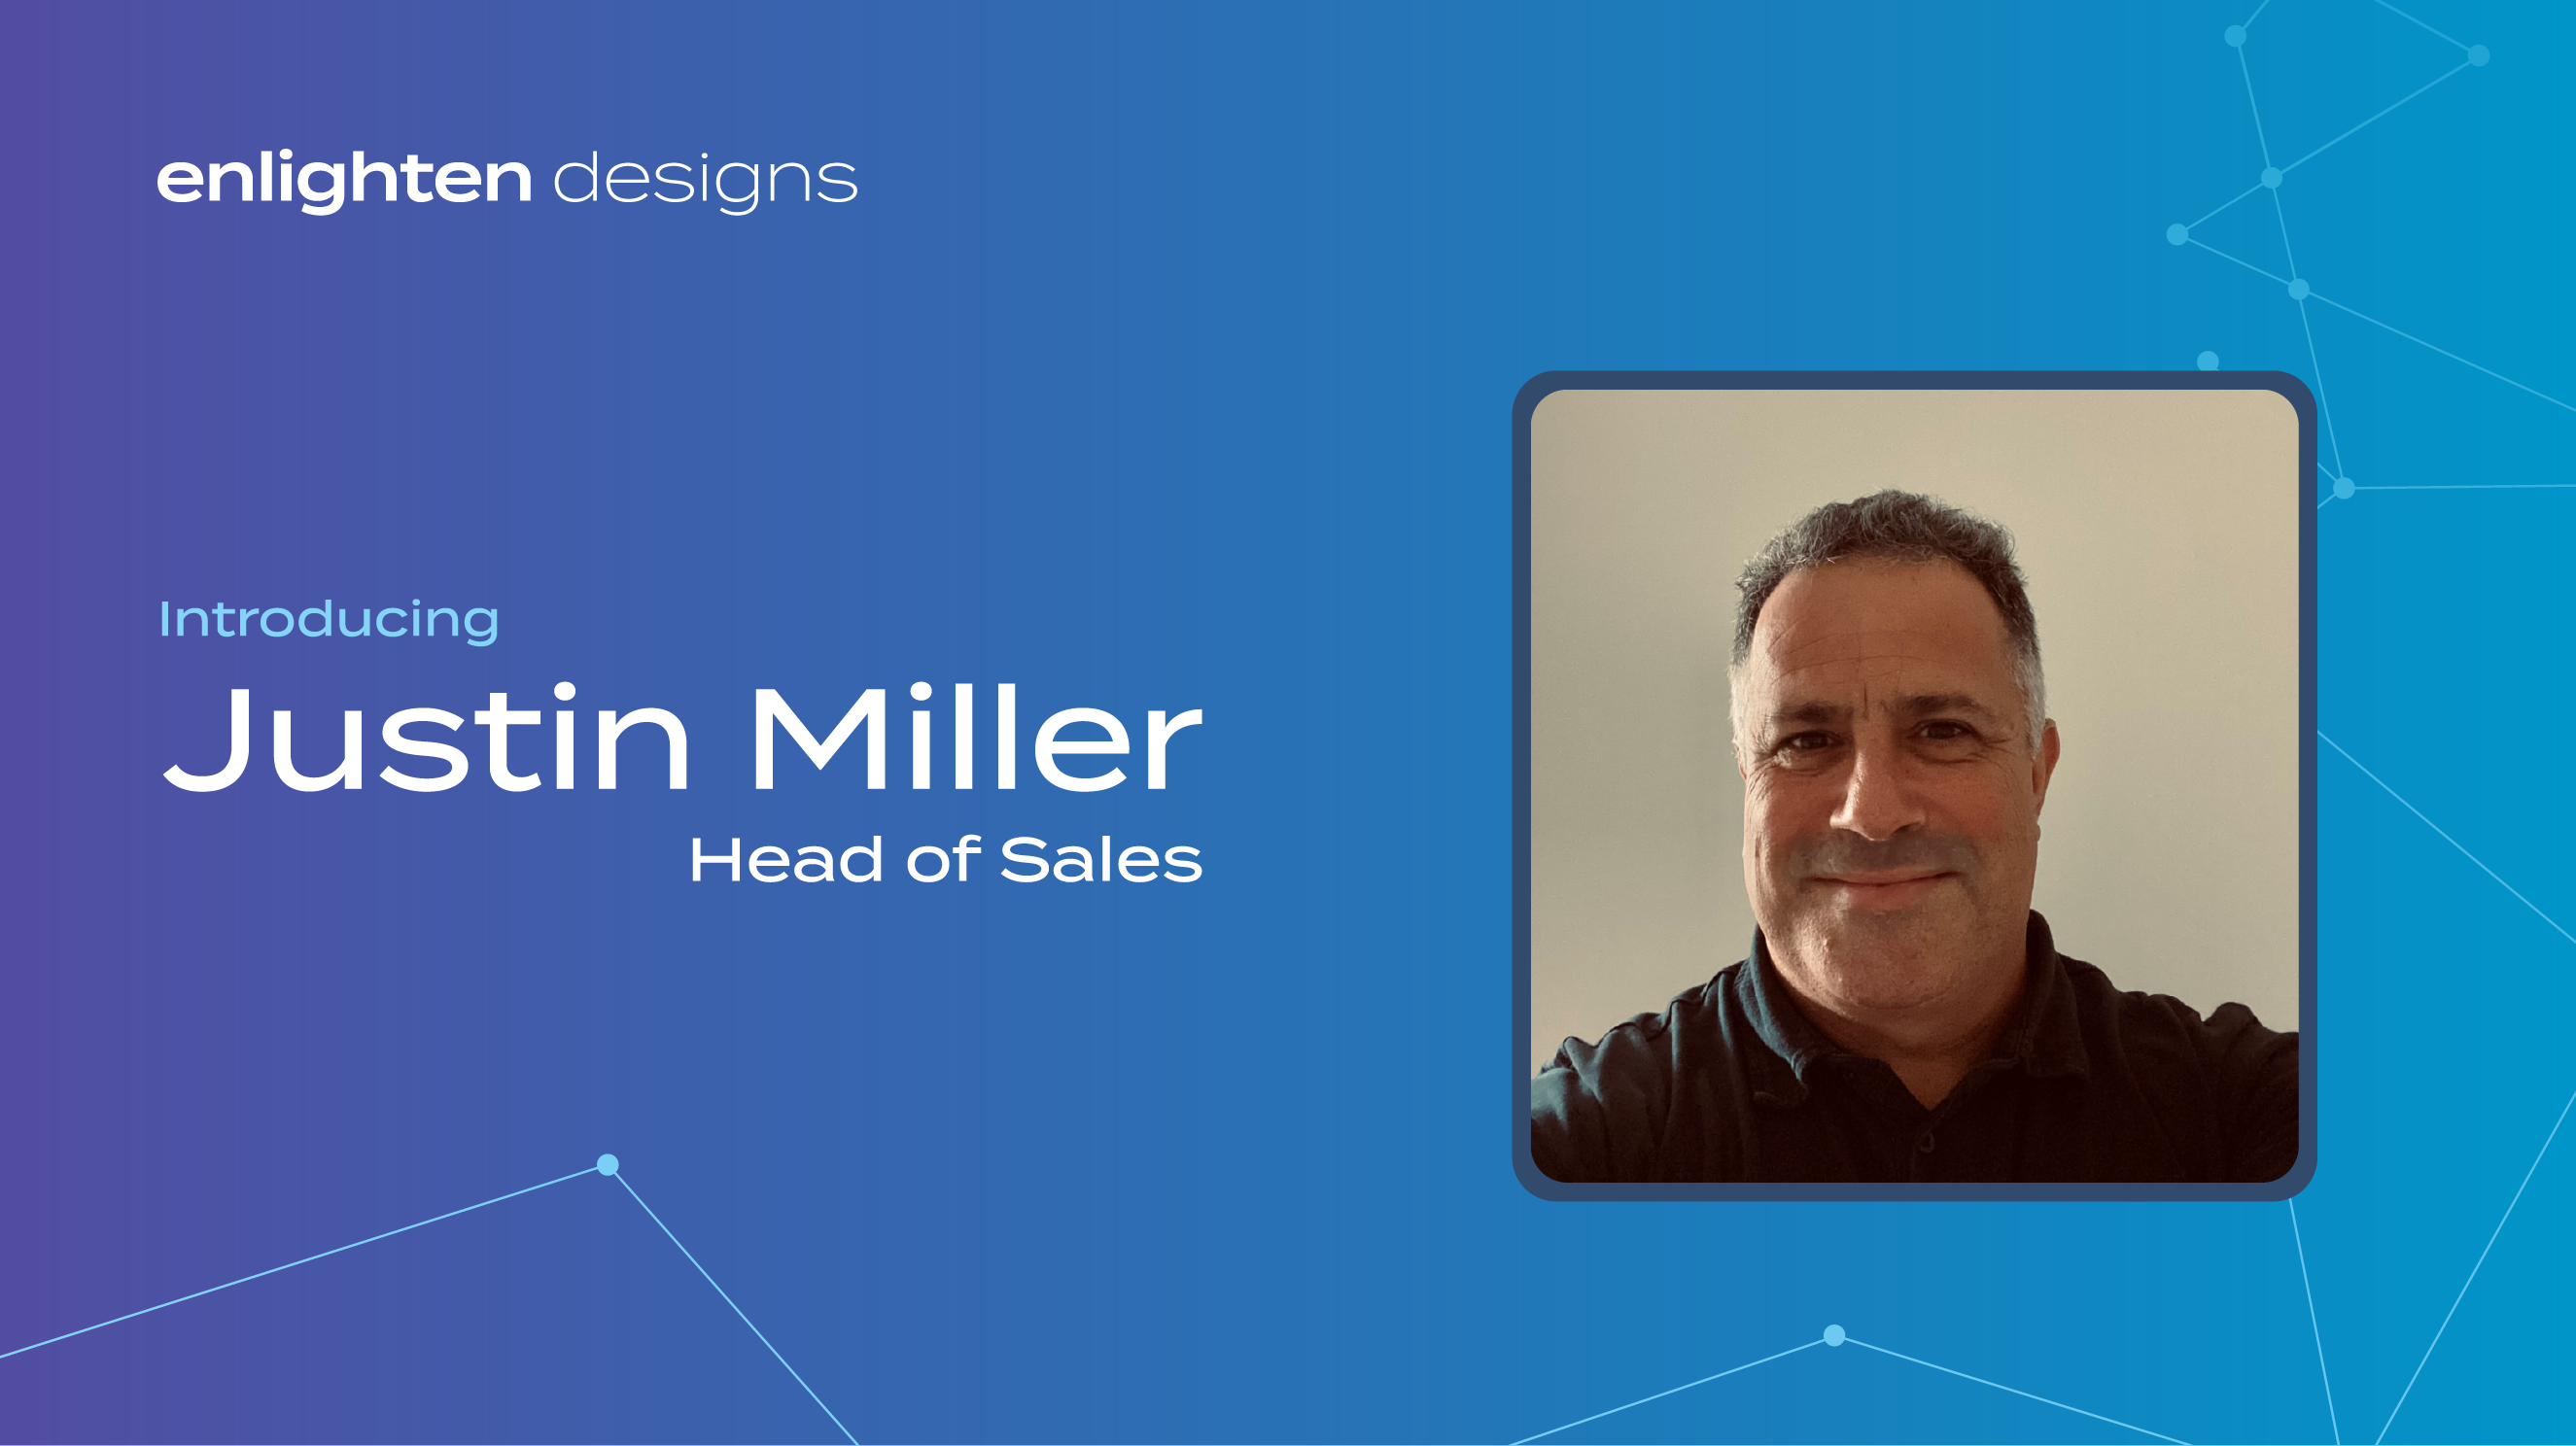 Introducing Justin Miller - Head of Sales